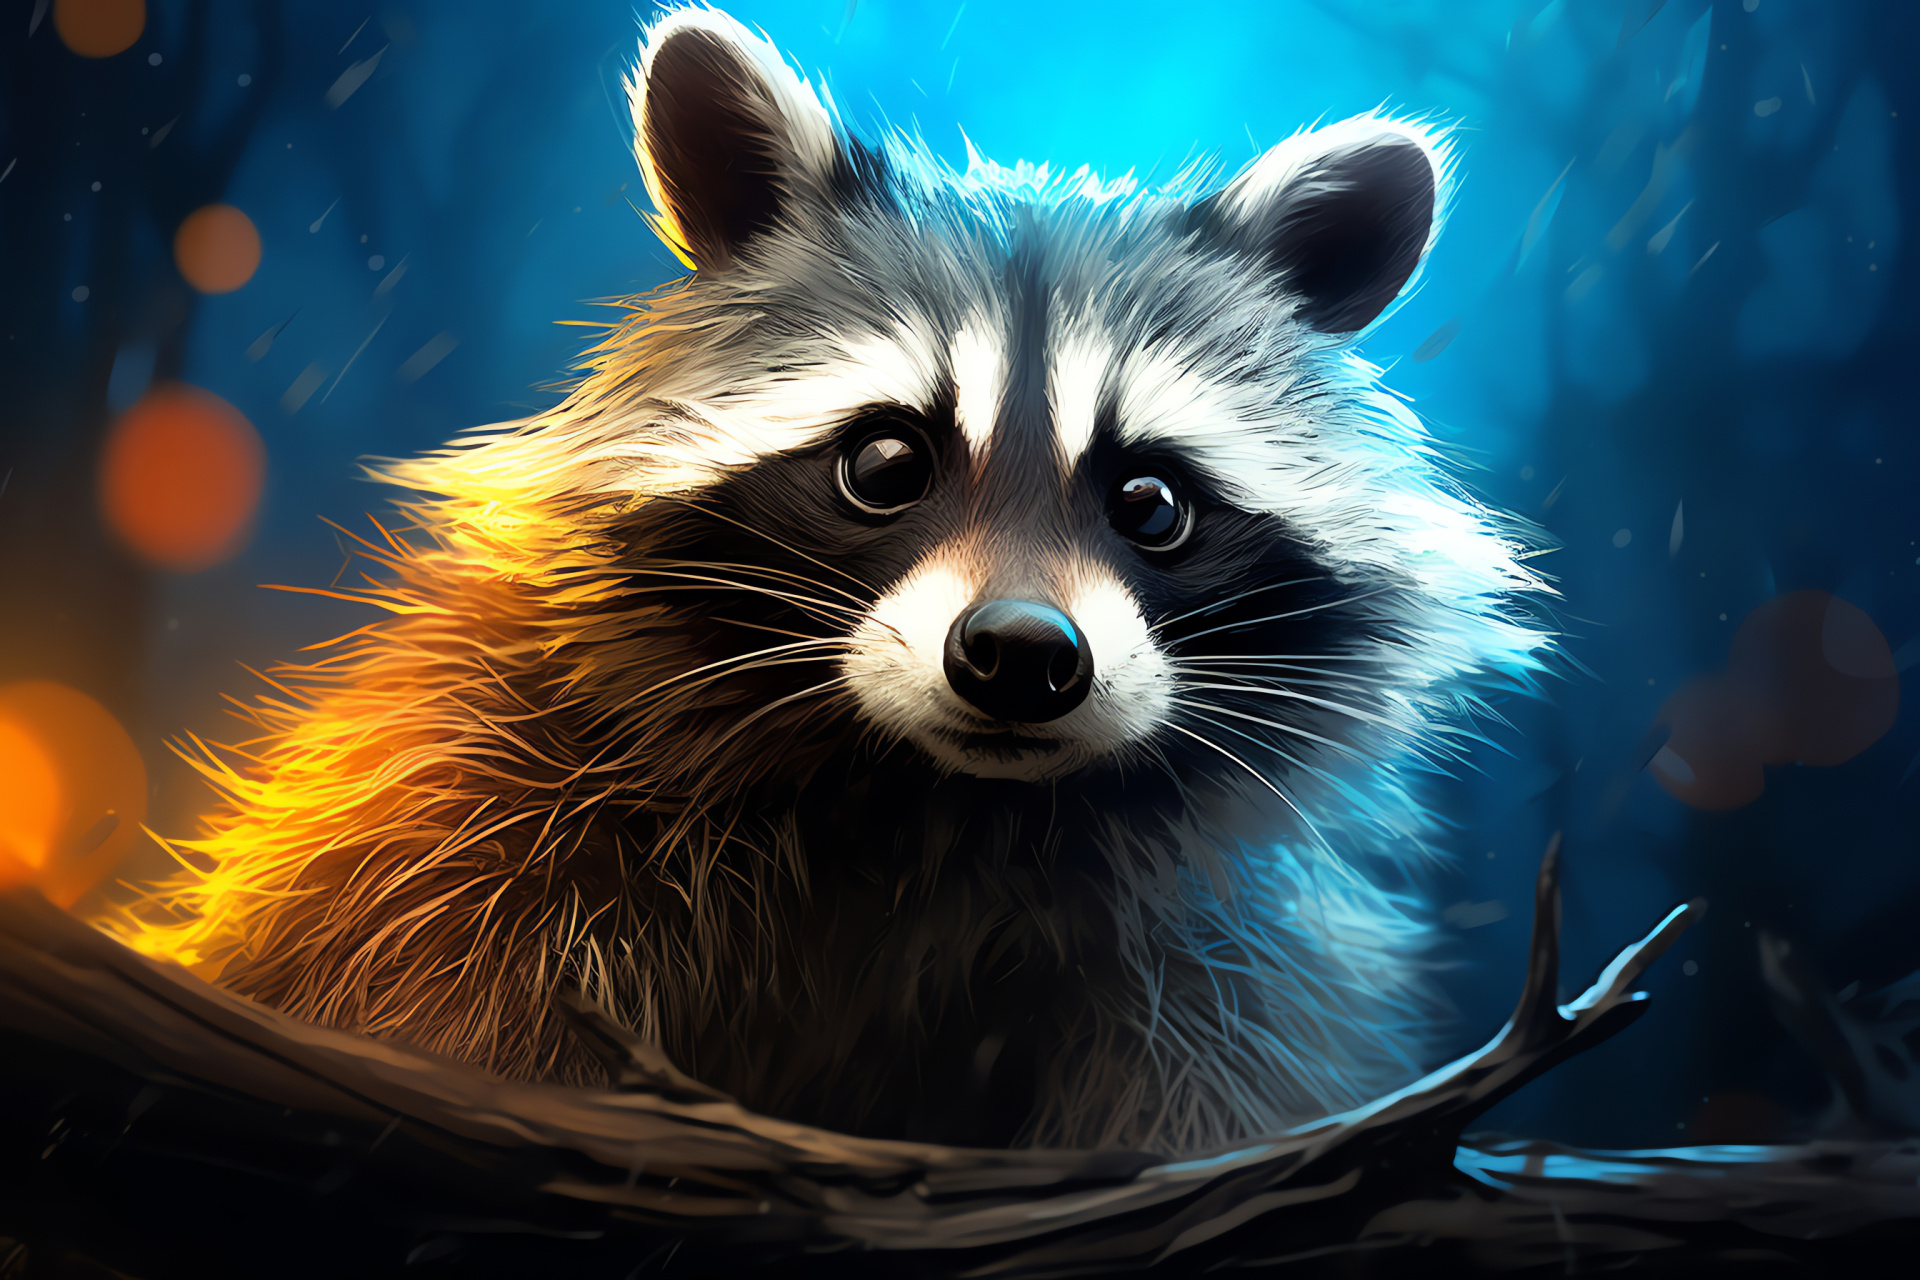 Raccoon, animal omnivore, suburban night life, raccoon eyes, mammalian species, HD Desktop Wallpaper